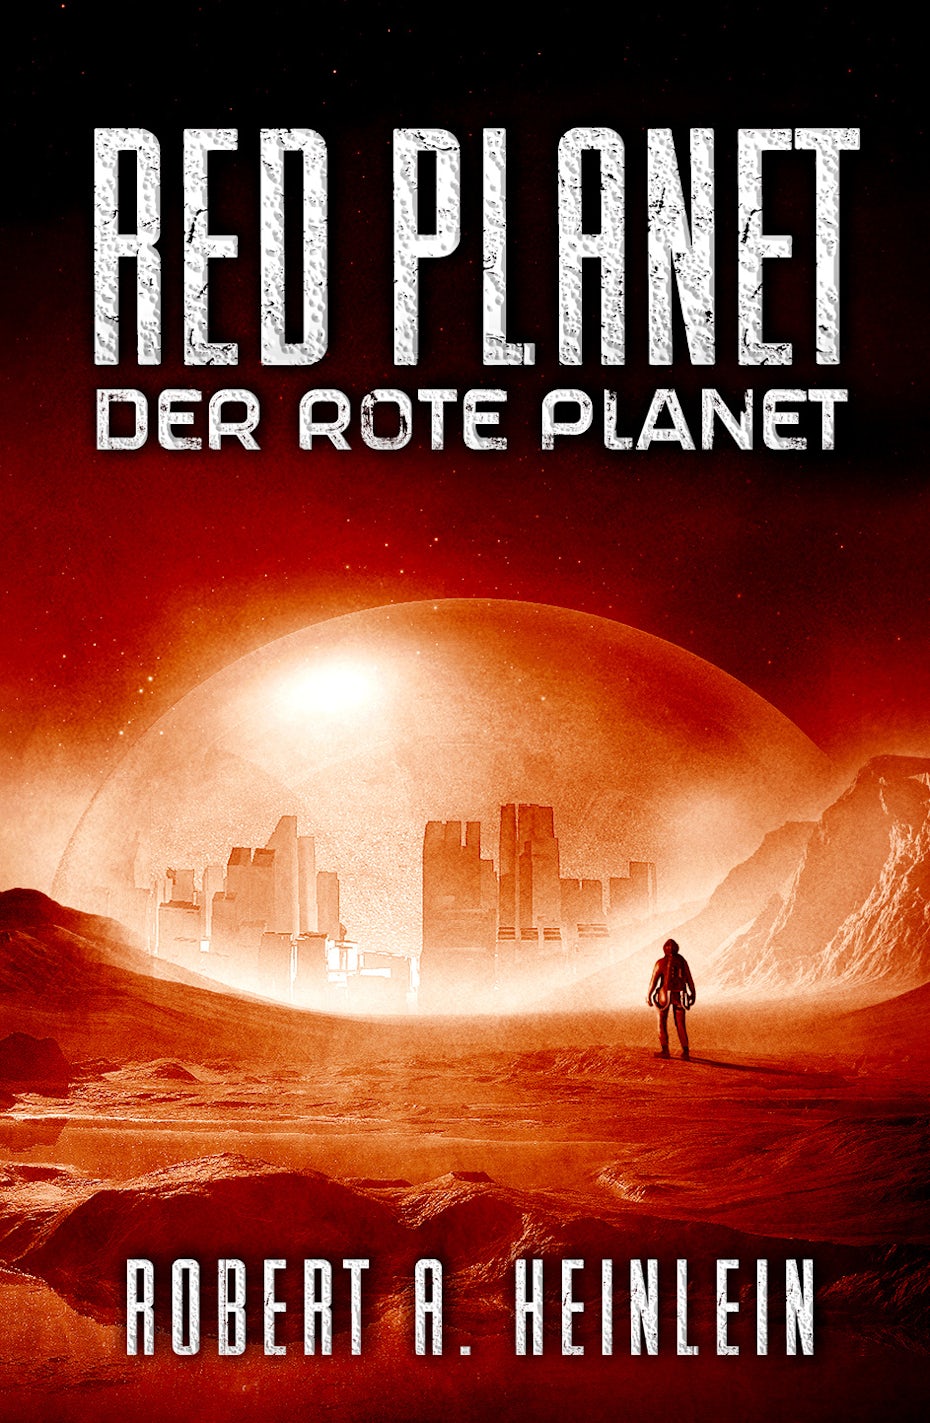 Mars space sci-fi novel cover